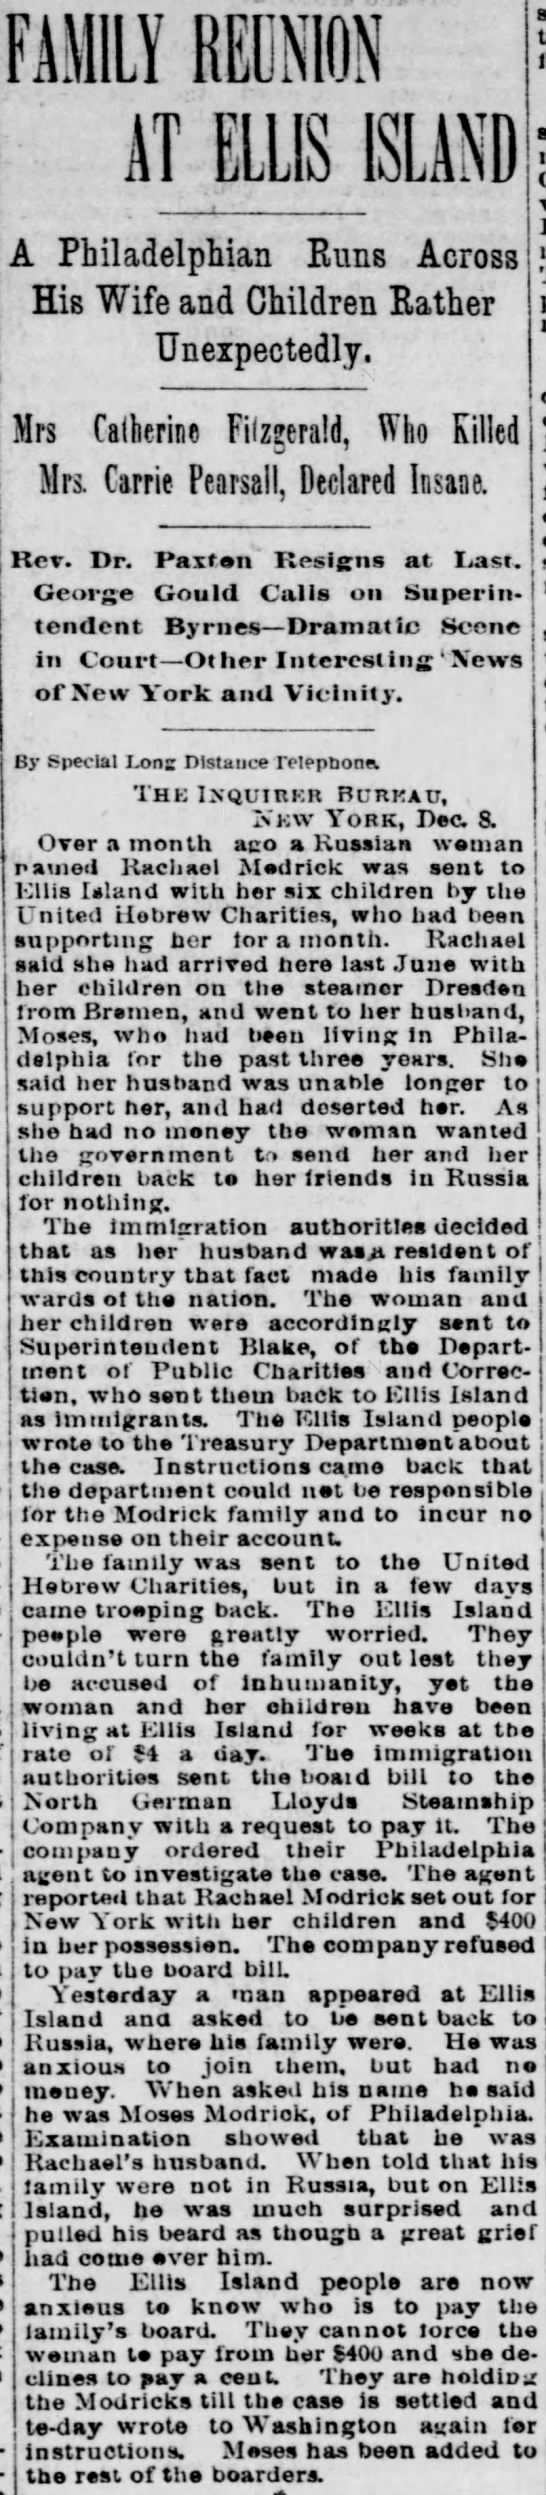 Newspaper article describing an unexpected family reunion at Ellis Island - 